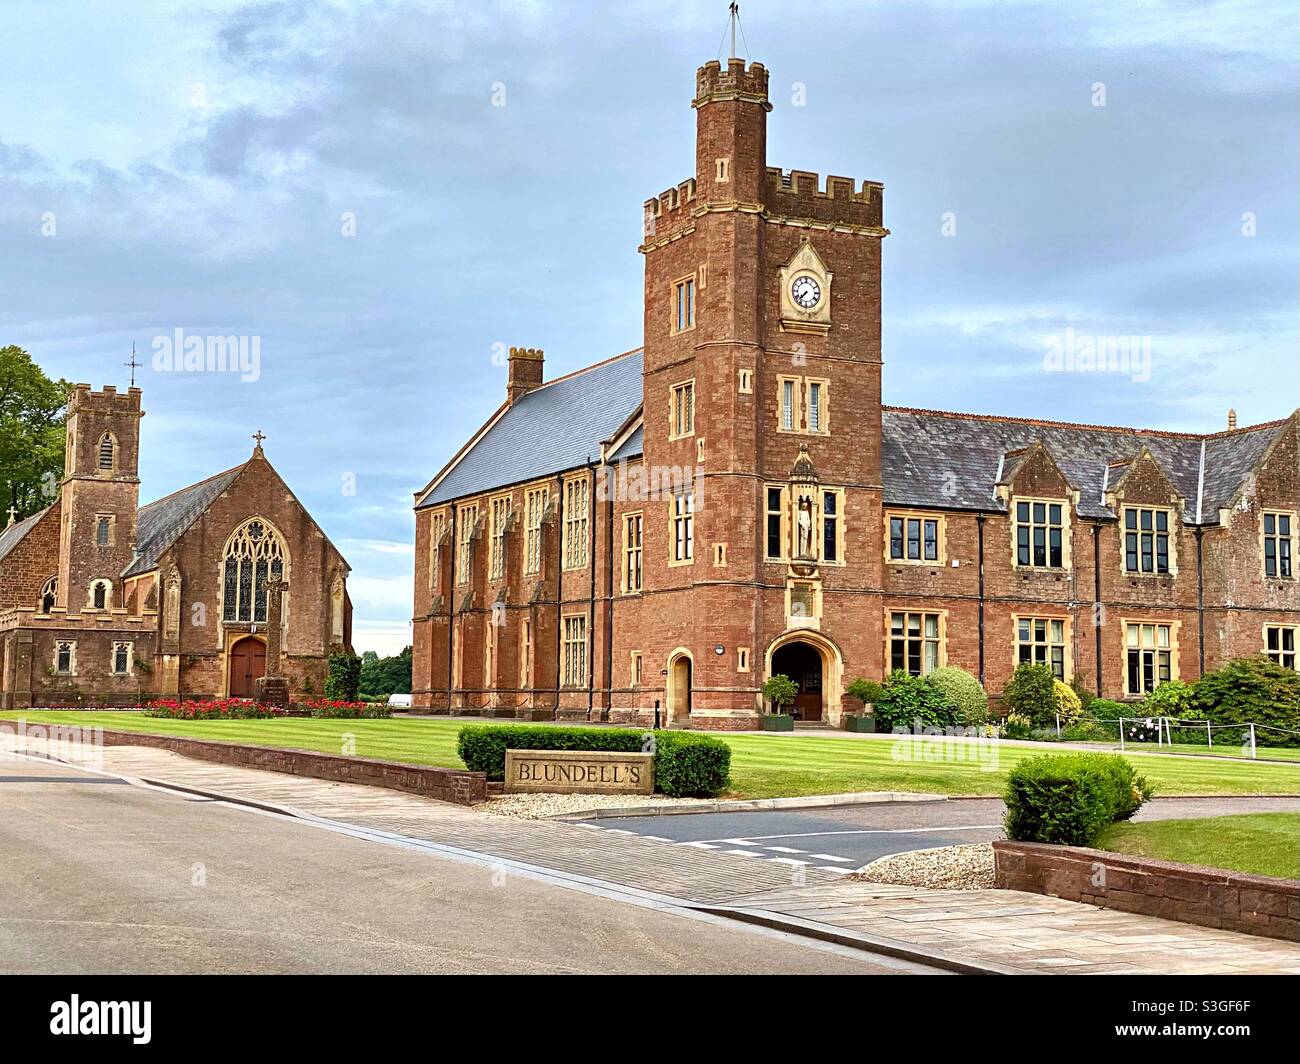 Blundells School, Tiverton is an astonishingly beautiful building. Stock Photo